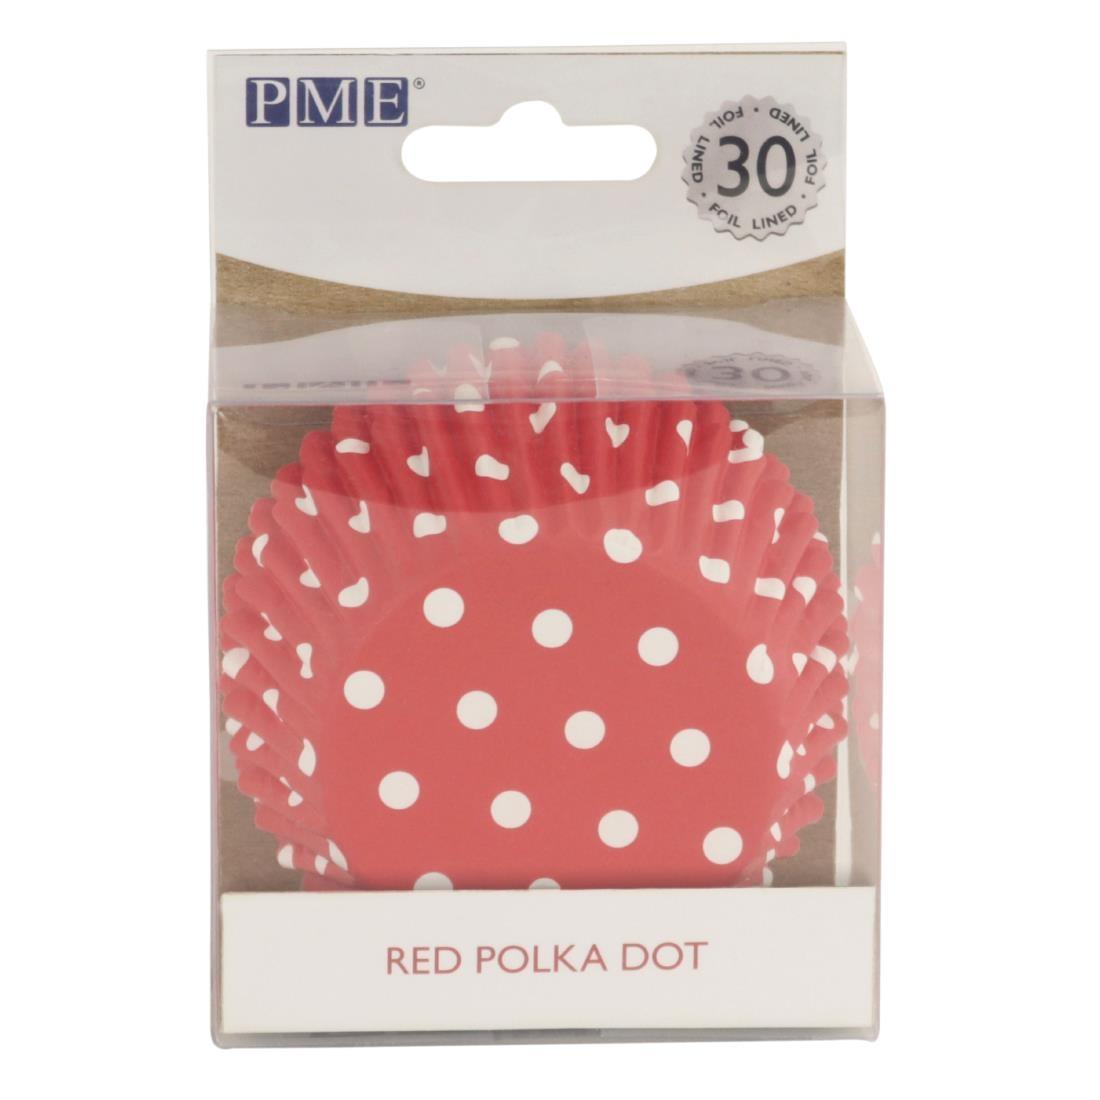 PME Cupcake Foil Lined Baking Cases Polka Dot (Pack of 30) - GE849  - 6